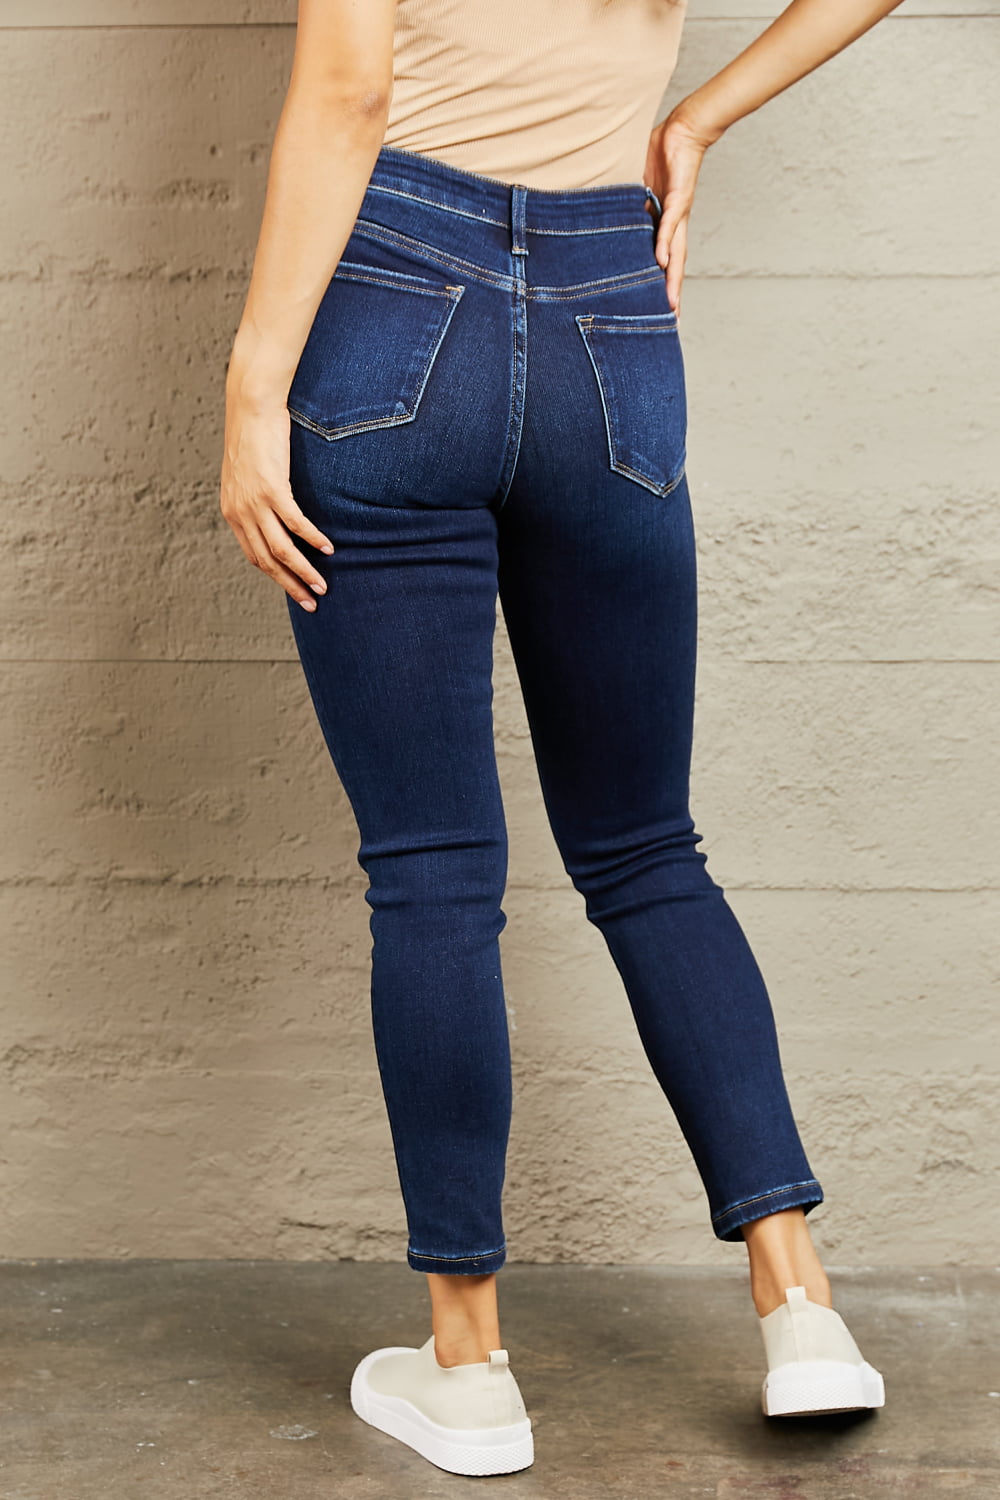 BAYEAS Mid Rise Slim Jeans - Alonna's Legging Land